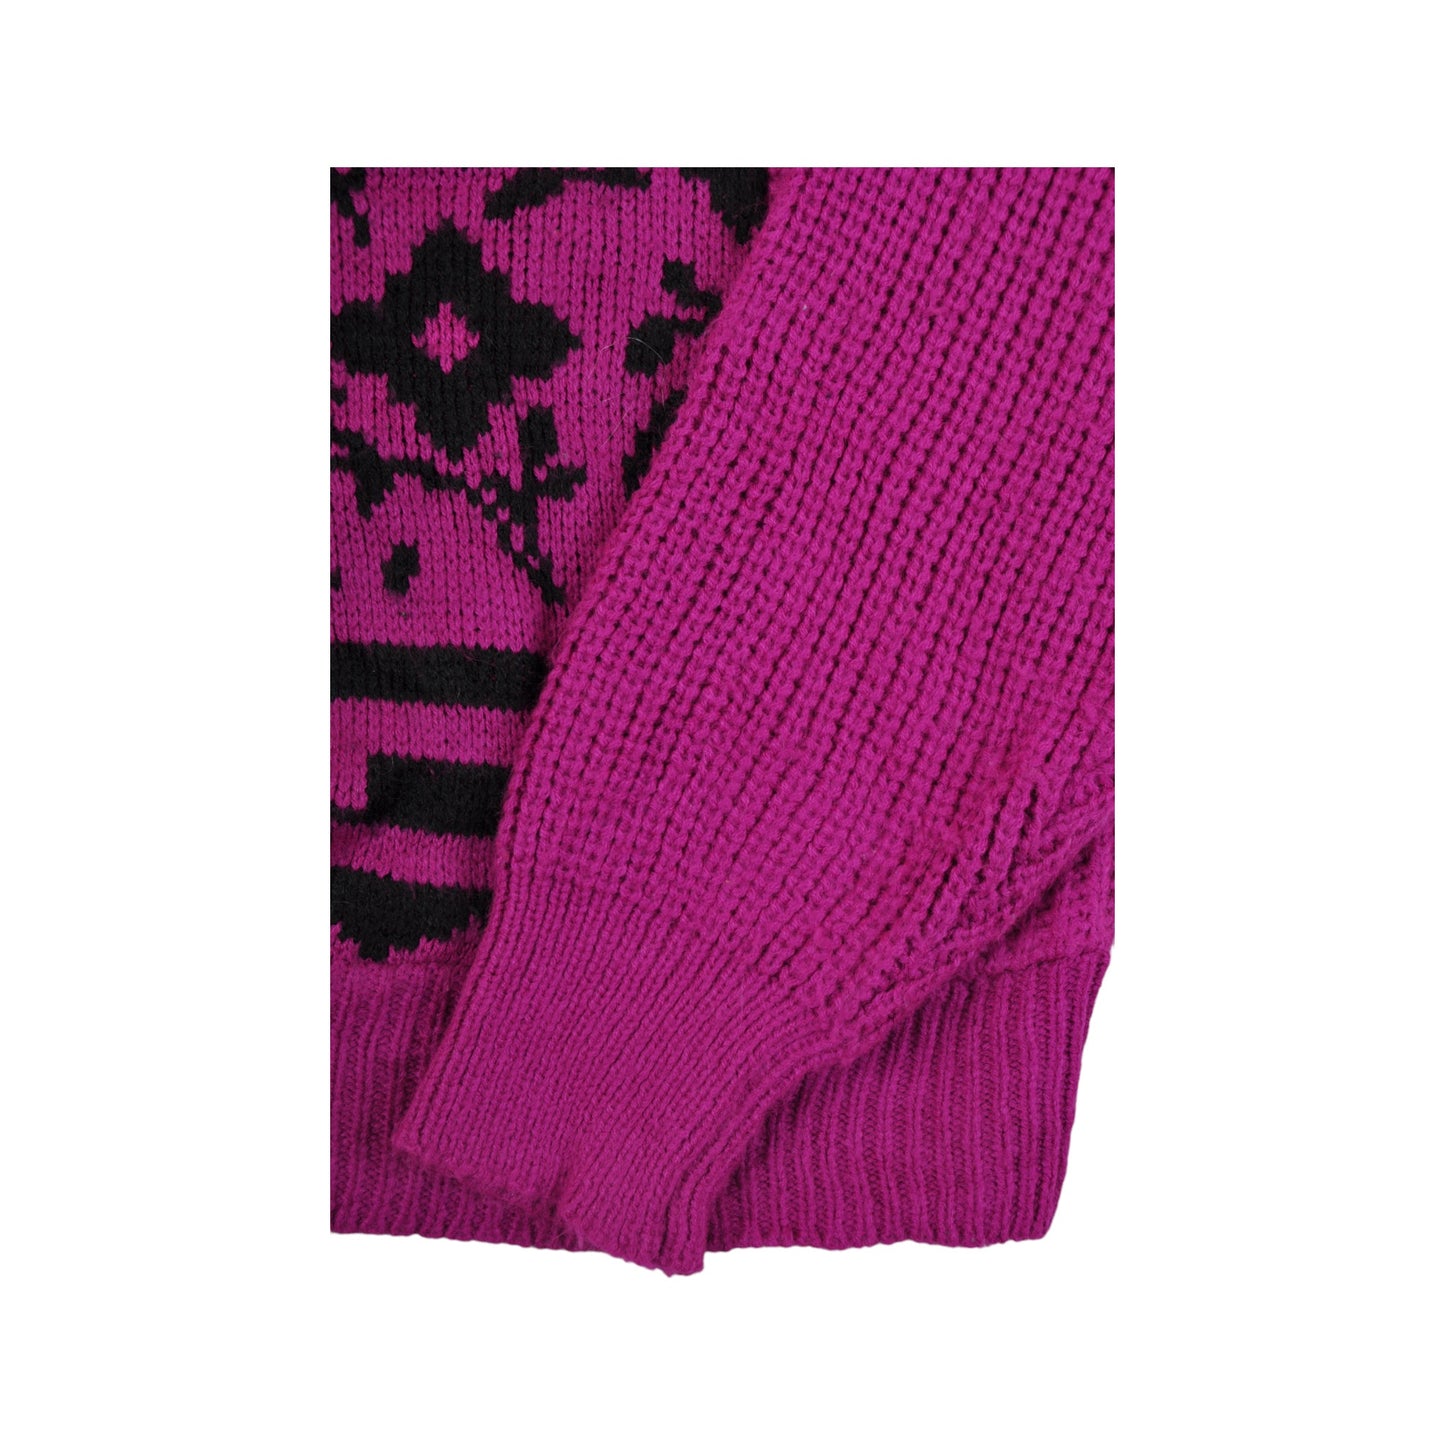 Vintage Knitted Jumper Retro Pattern Pink/Black Ladies Medium